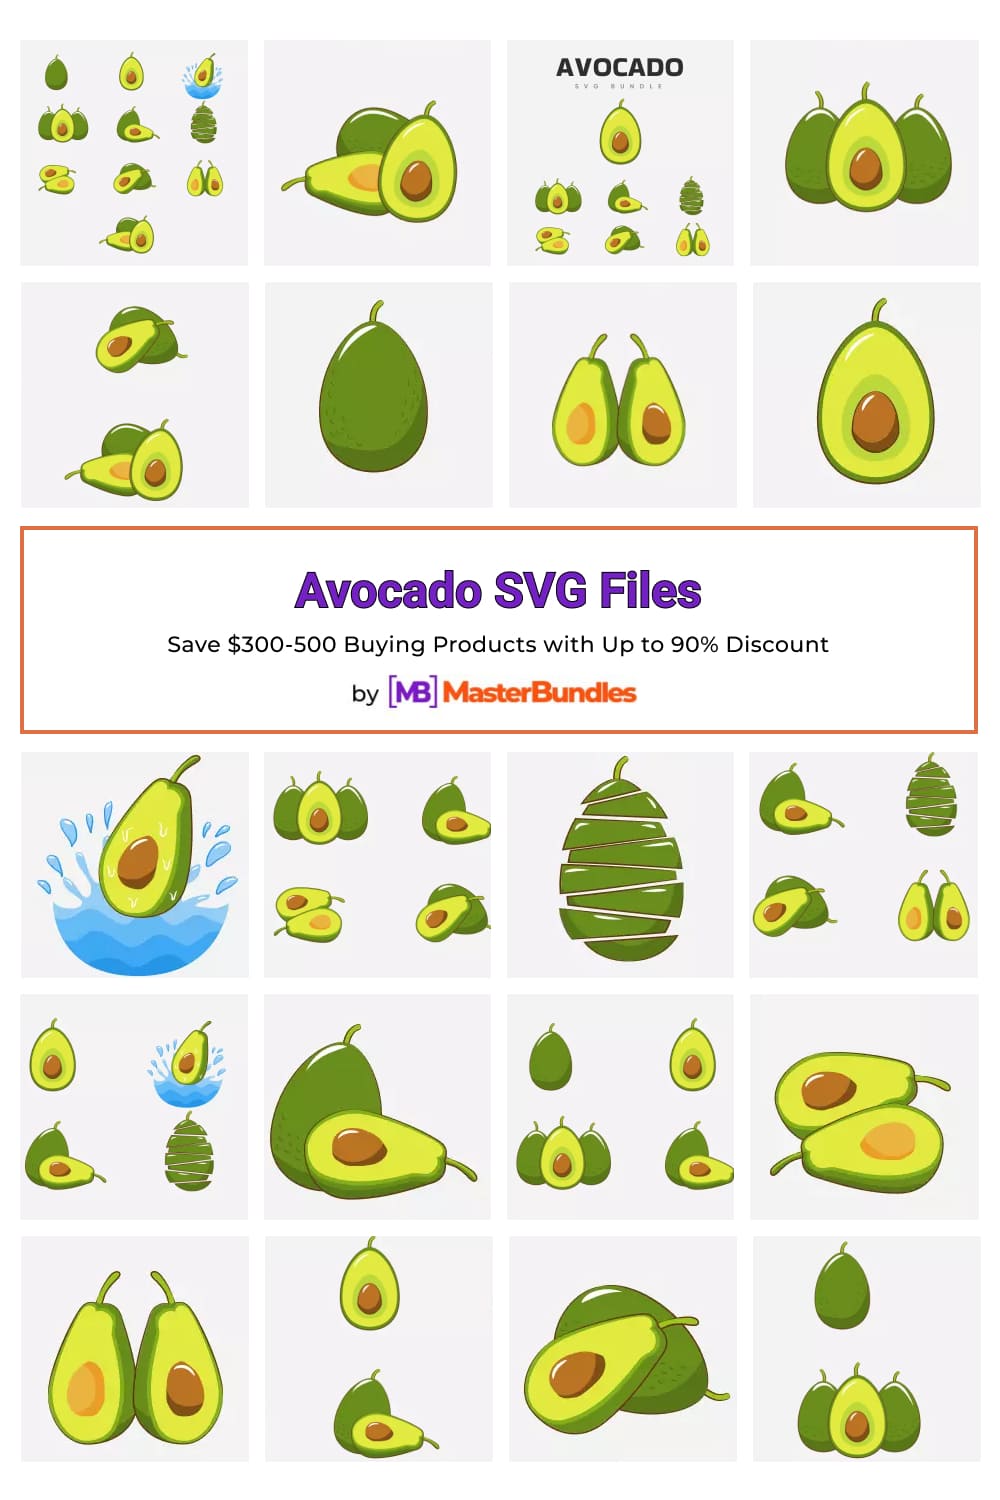 Avocado SVG Files for pinterest.